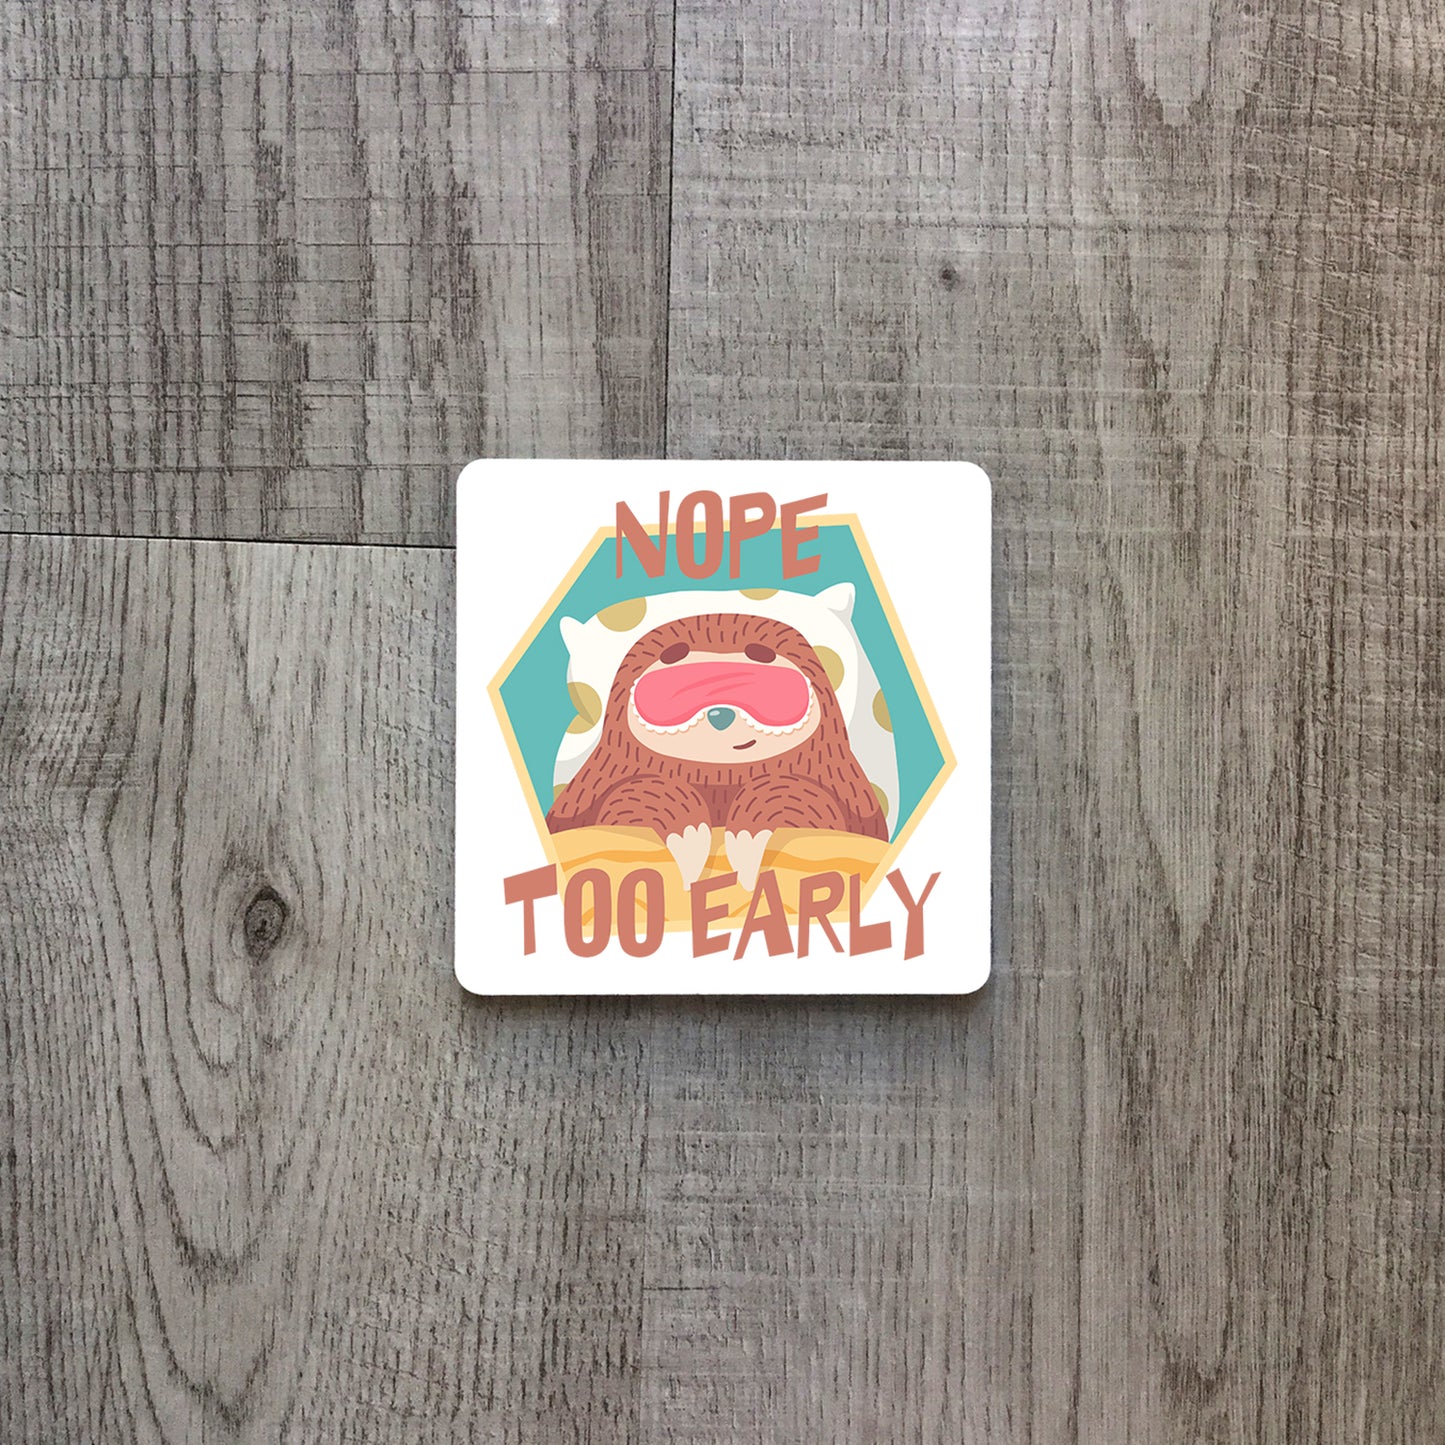 "Nope - too early" with sleepy sloth | Ceramic mug - Adnil Creations